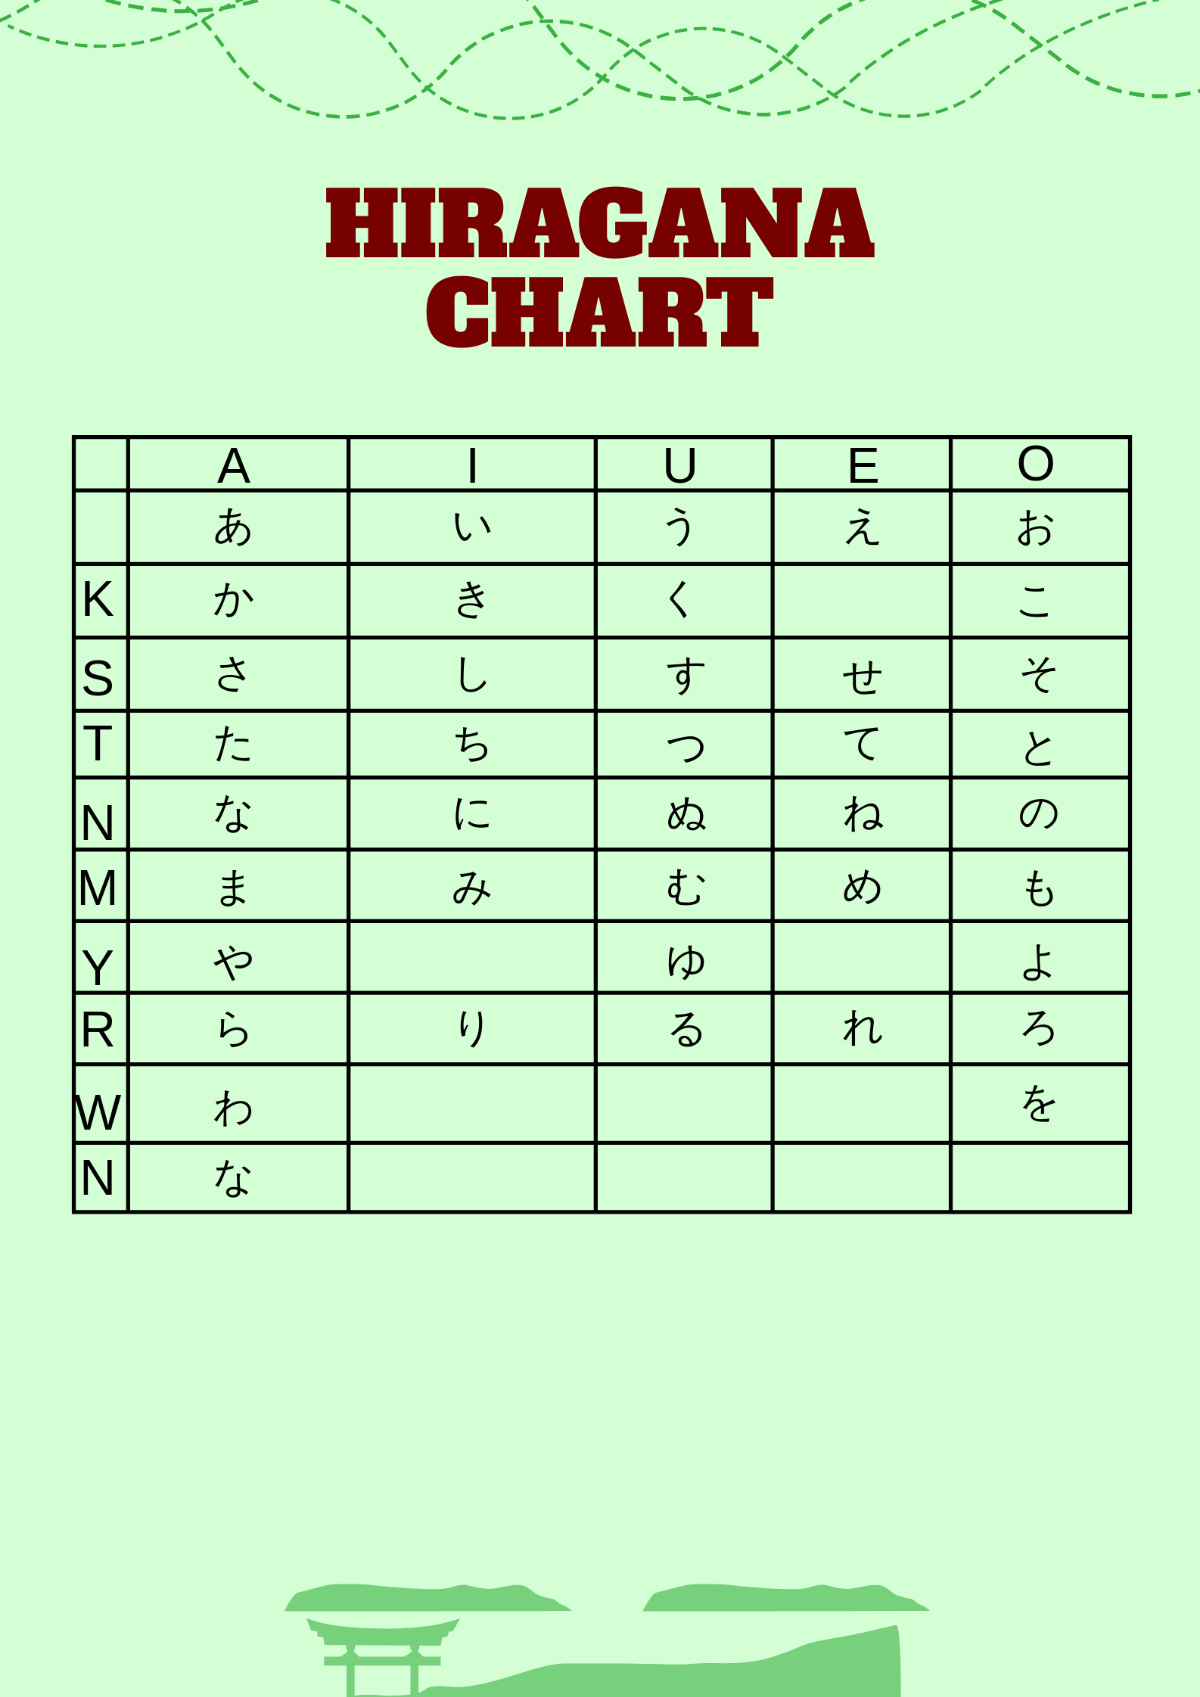 Hiragana Reference Chart Template